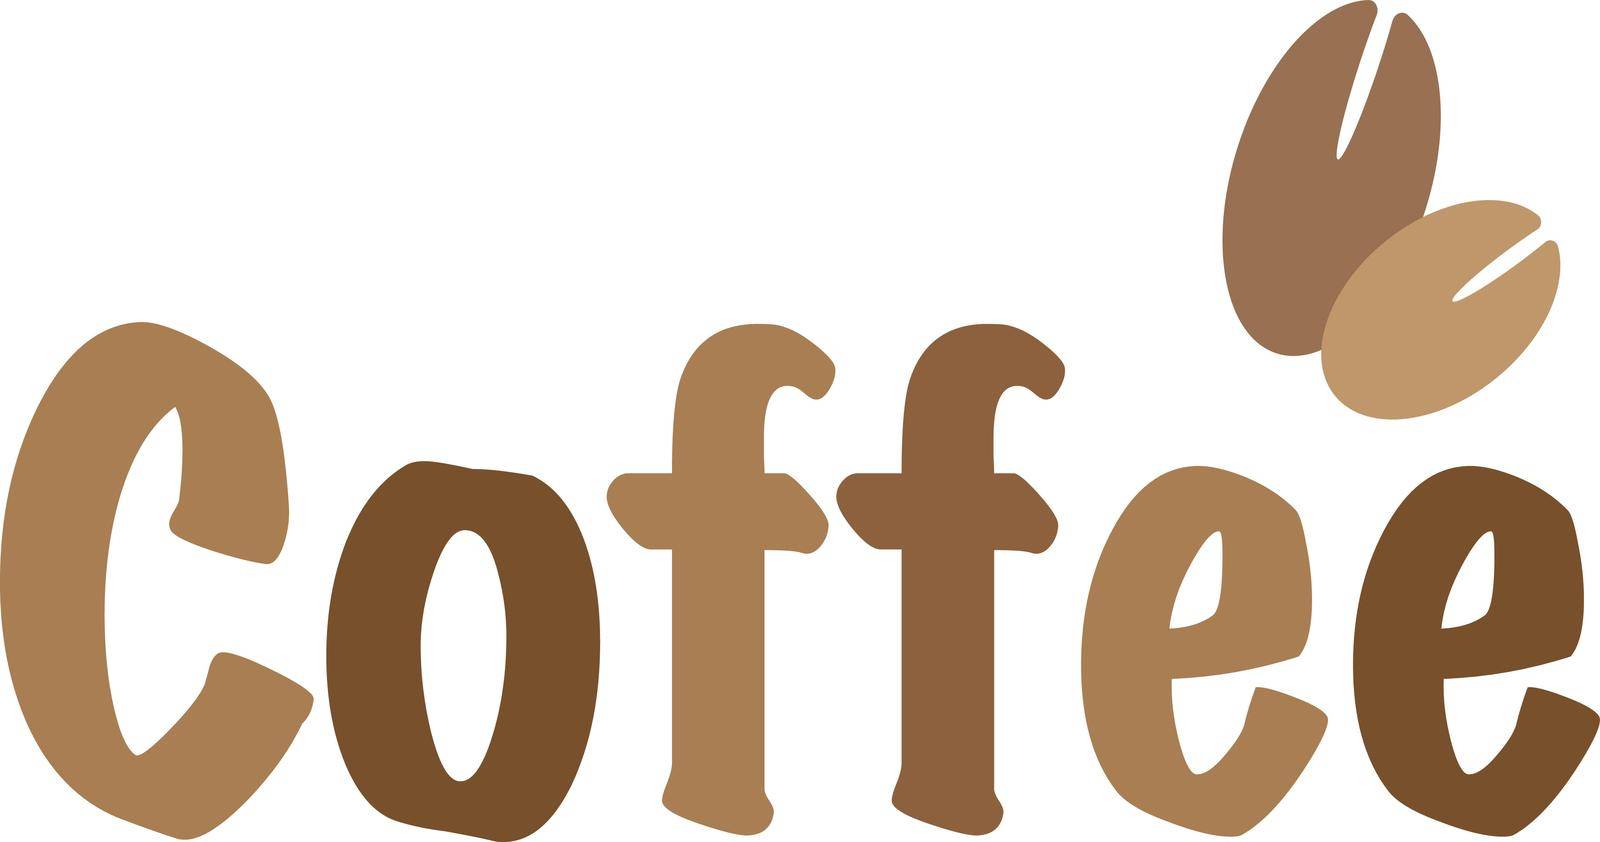 Coffee beans and coffee logo. Editable vector.